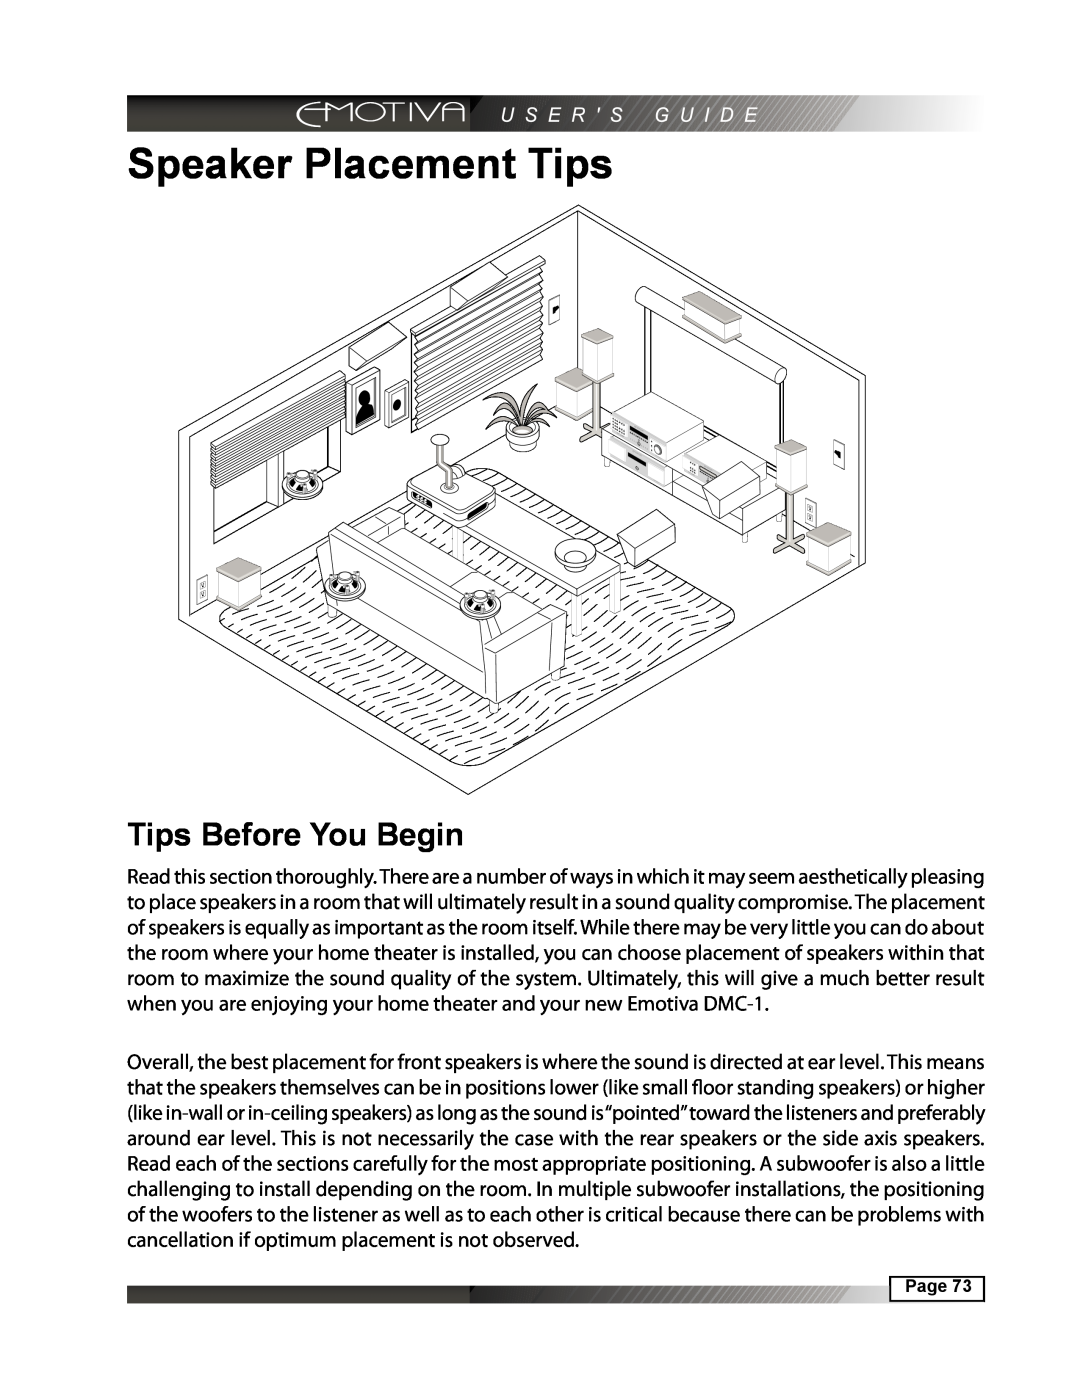 Emotiva DMC-1 manual Speaker Placement Tips, Tips Before You Begin 